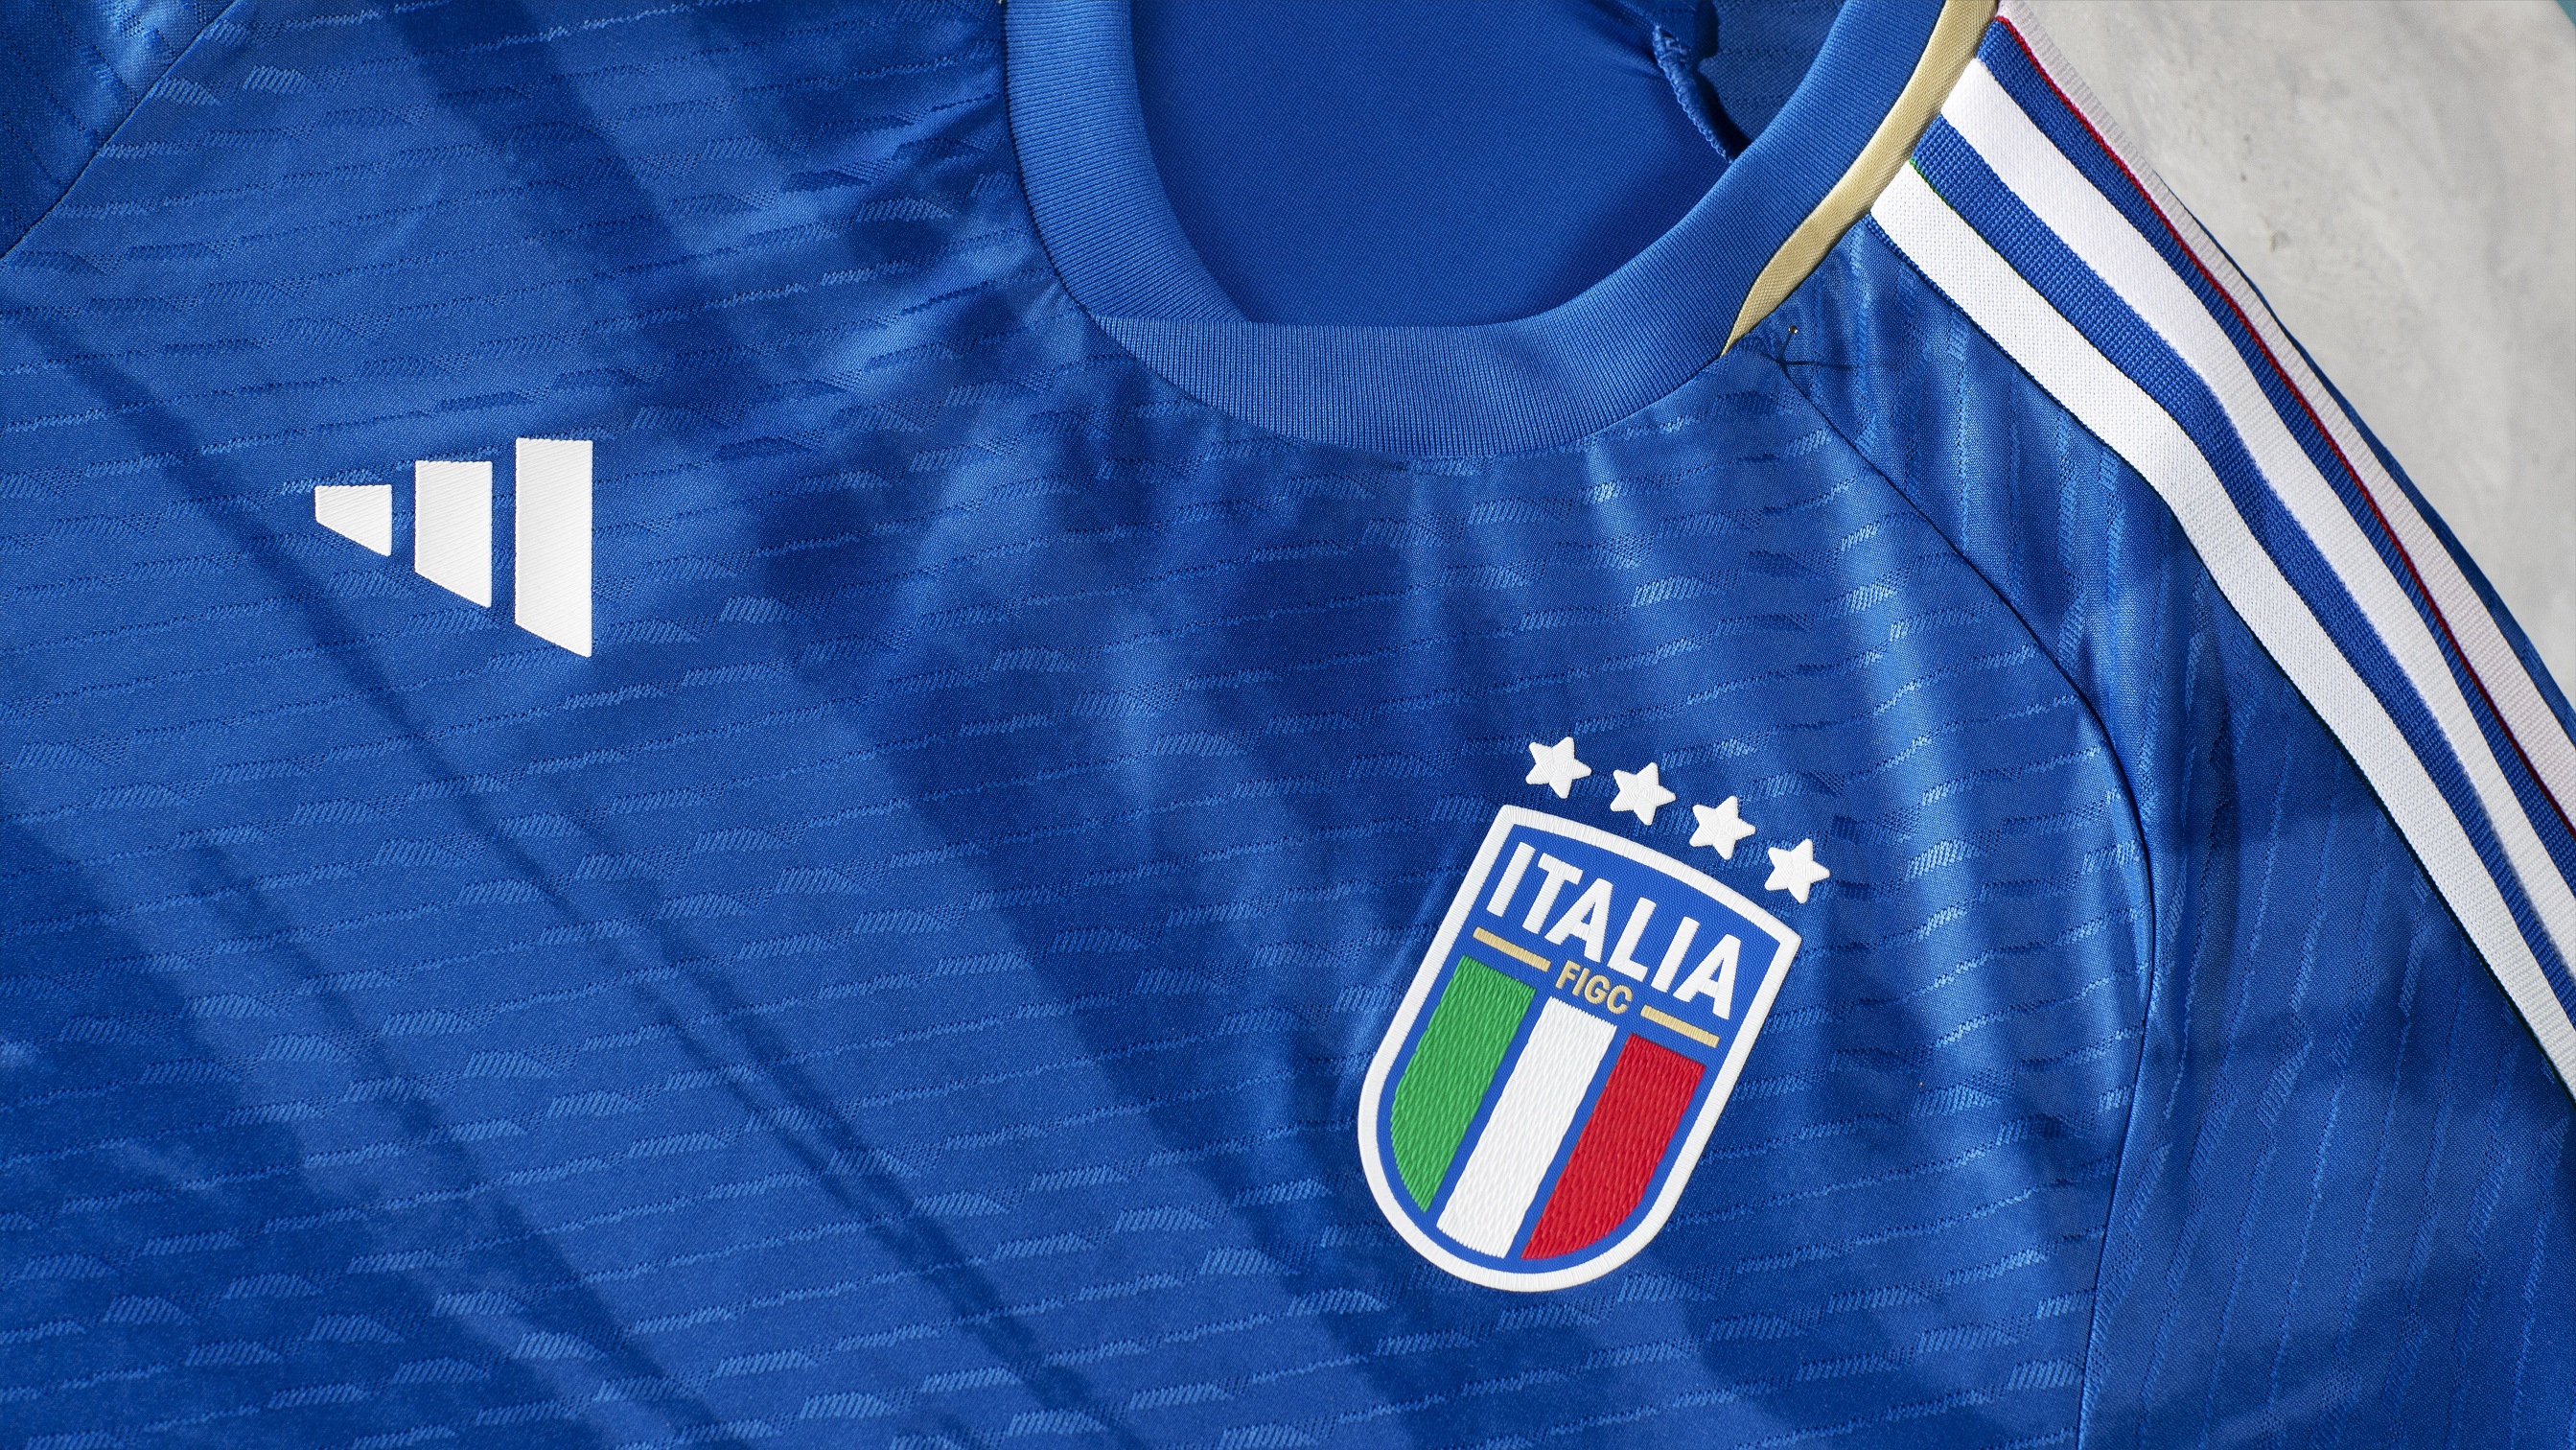 Italy soccer legends' kits